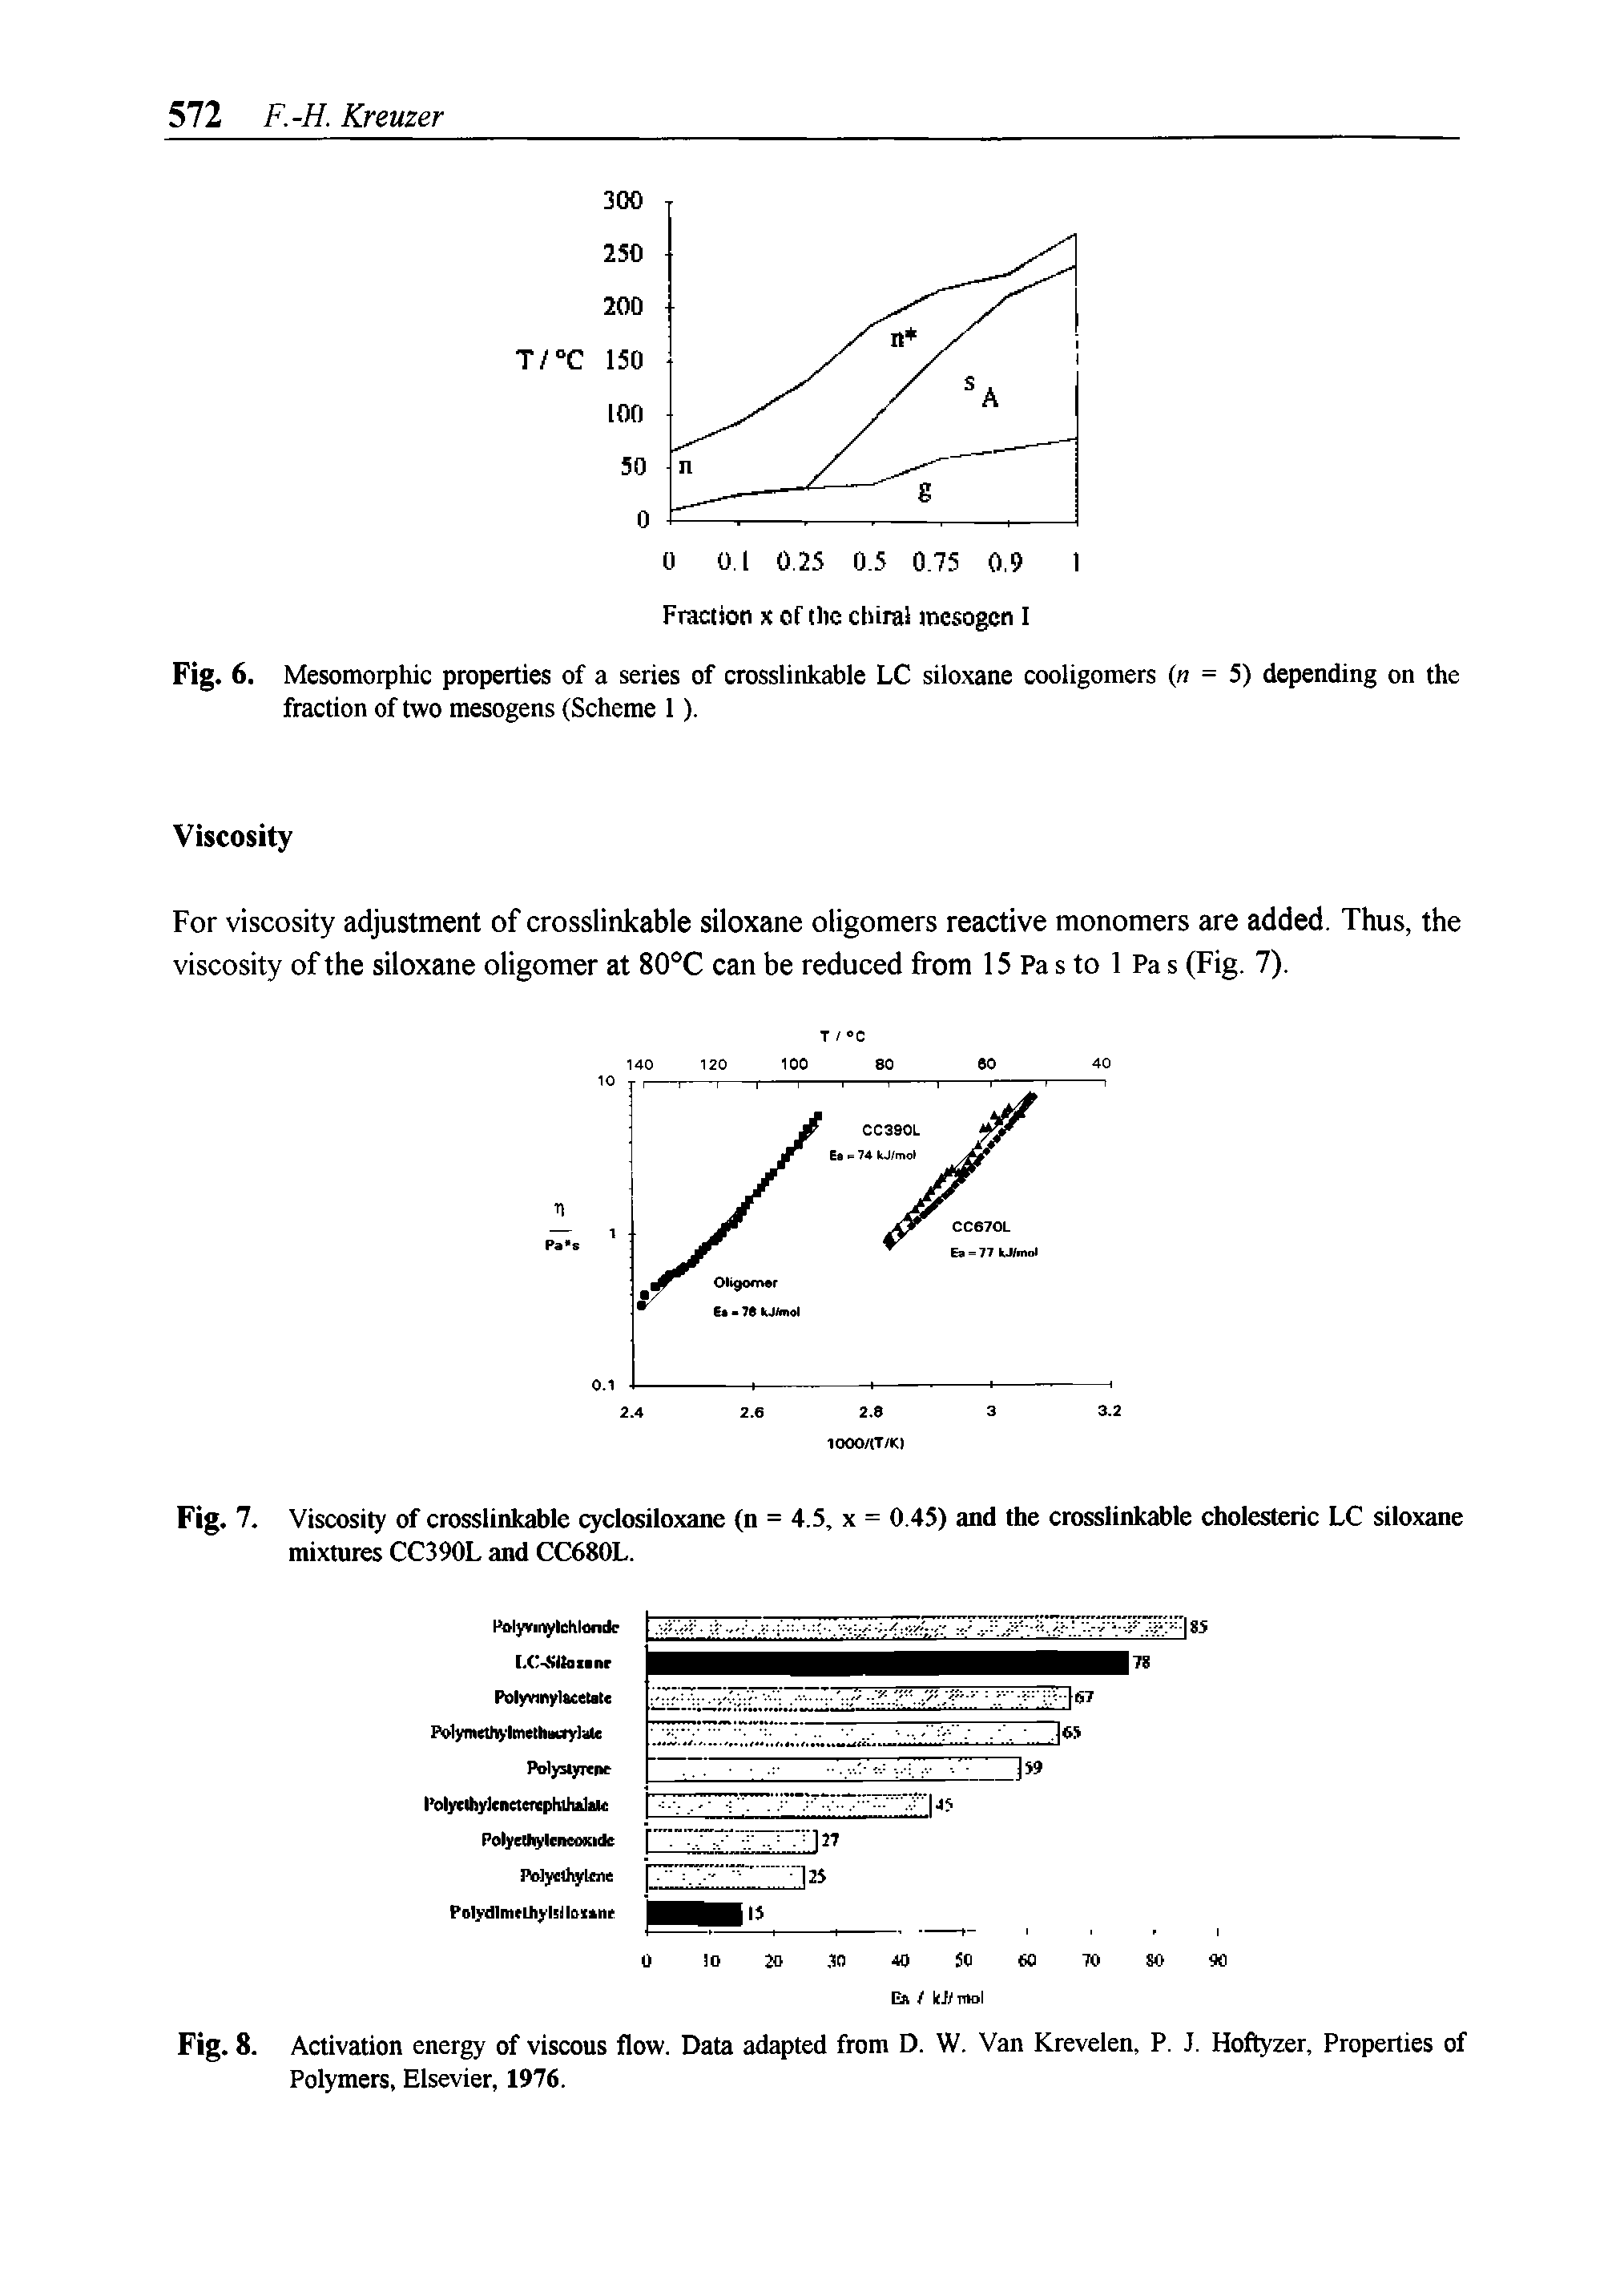 Fig. 8. Activation energy of viscous flow. Data adapted from D. W. Van Krevelen, P. J. Hoftyzer, Properties of Polymers, Elsevier, 1976.